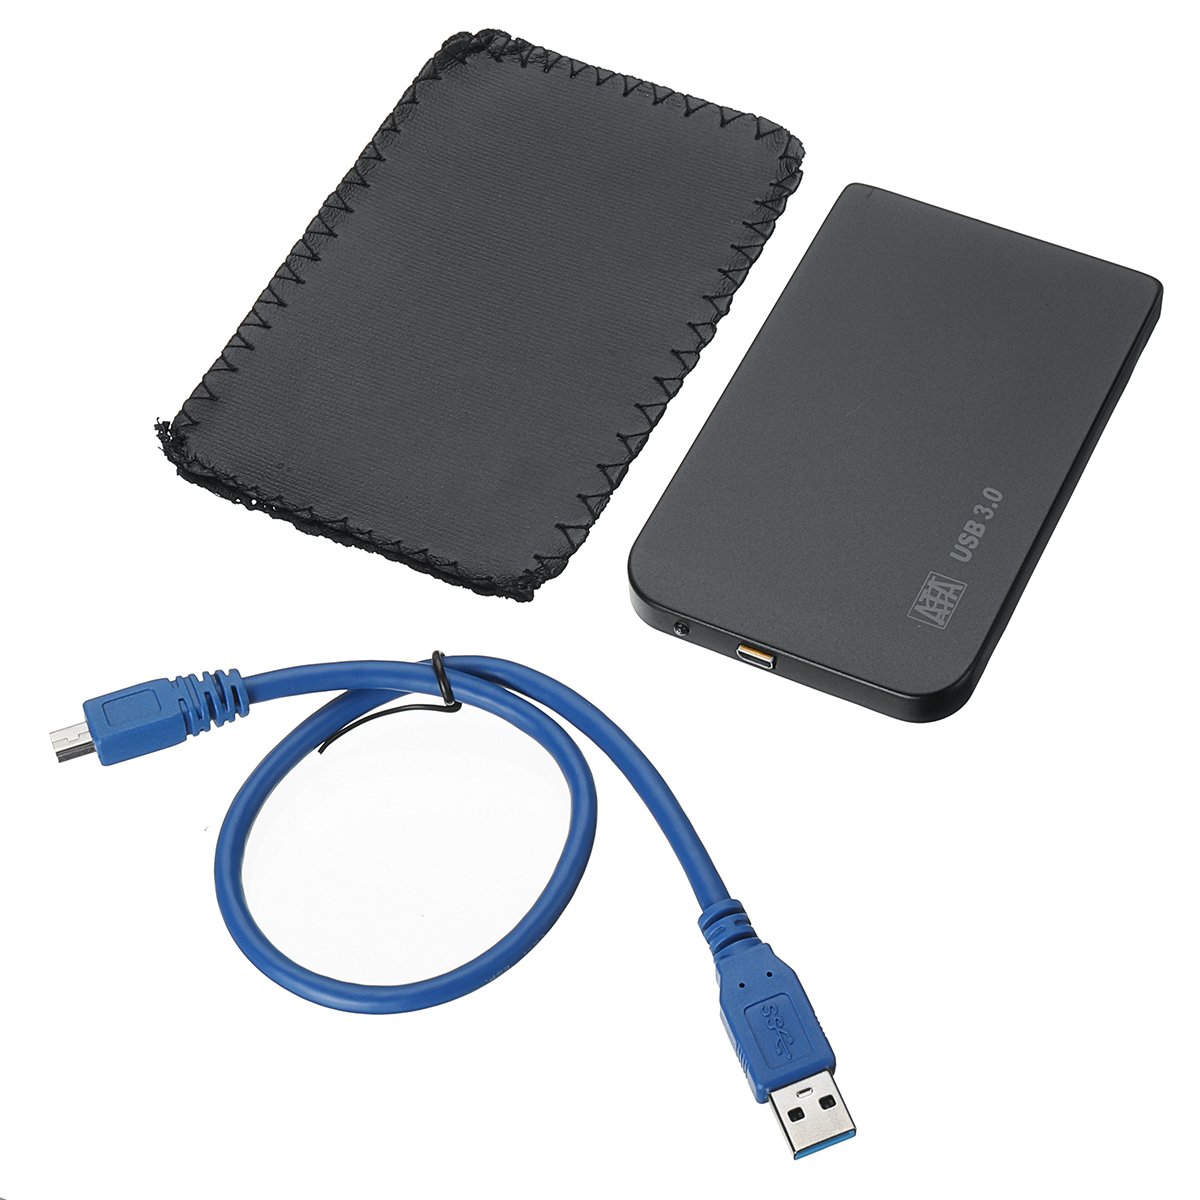 USB 3.0 SATA 2.5inch External HDD SSD Hard Drive Enclosure with Storage Bag 1